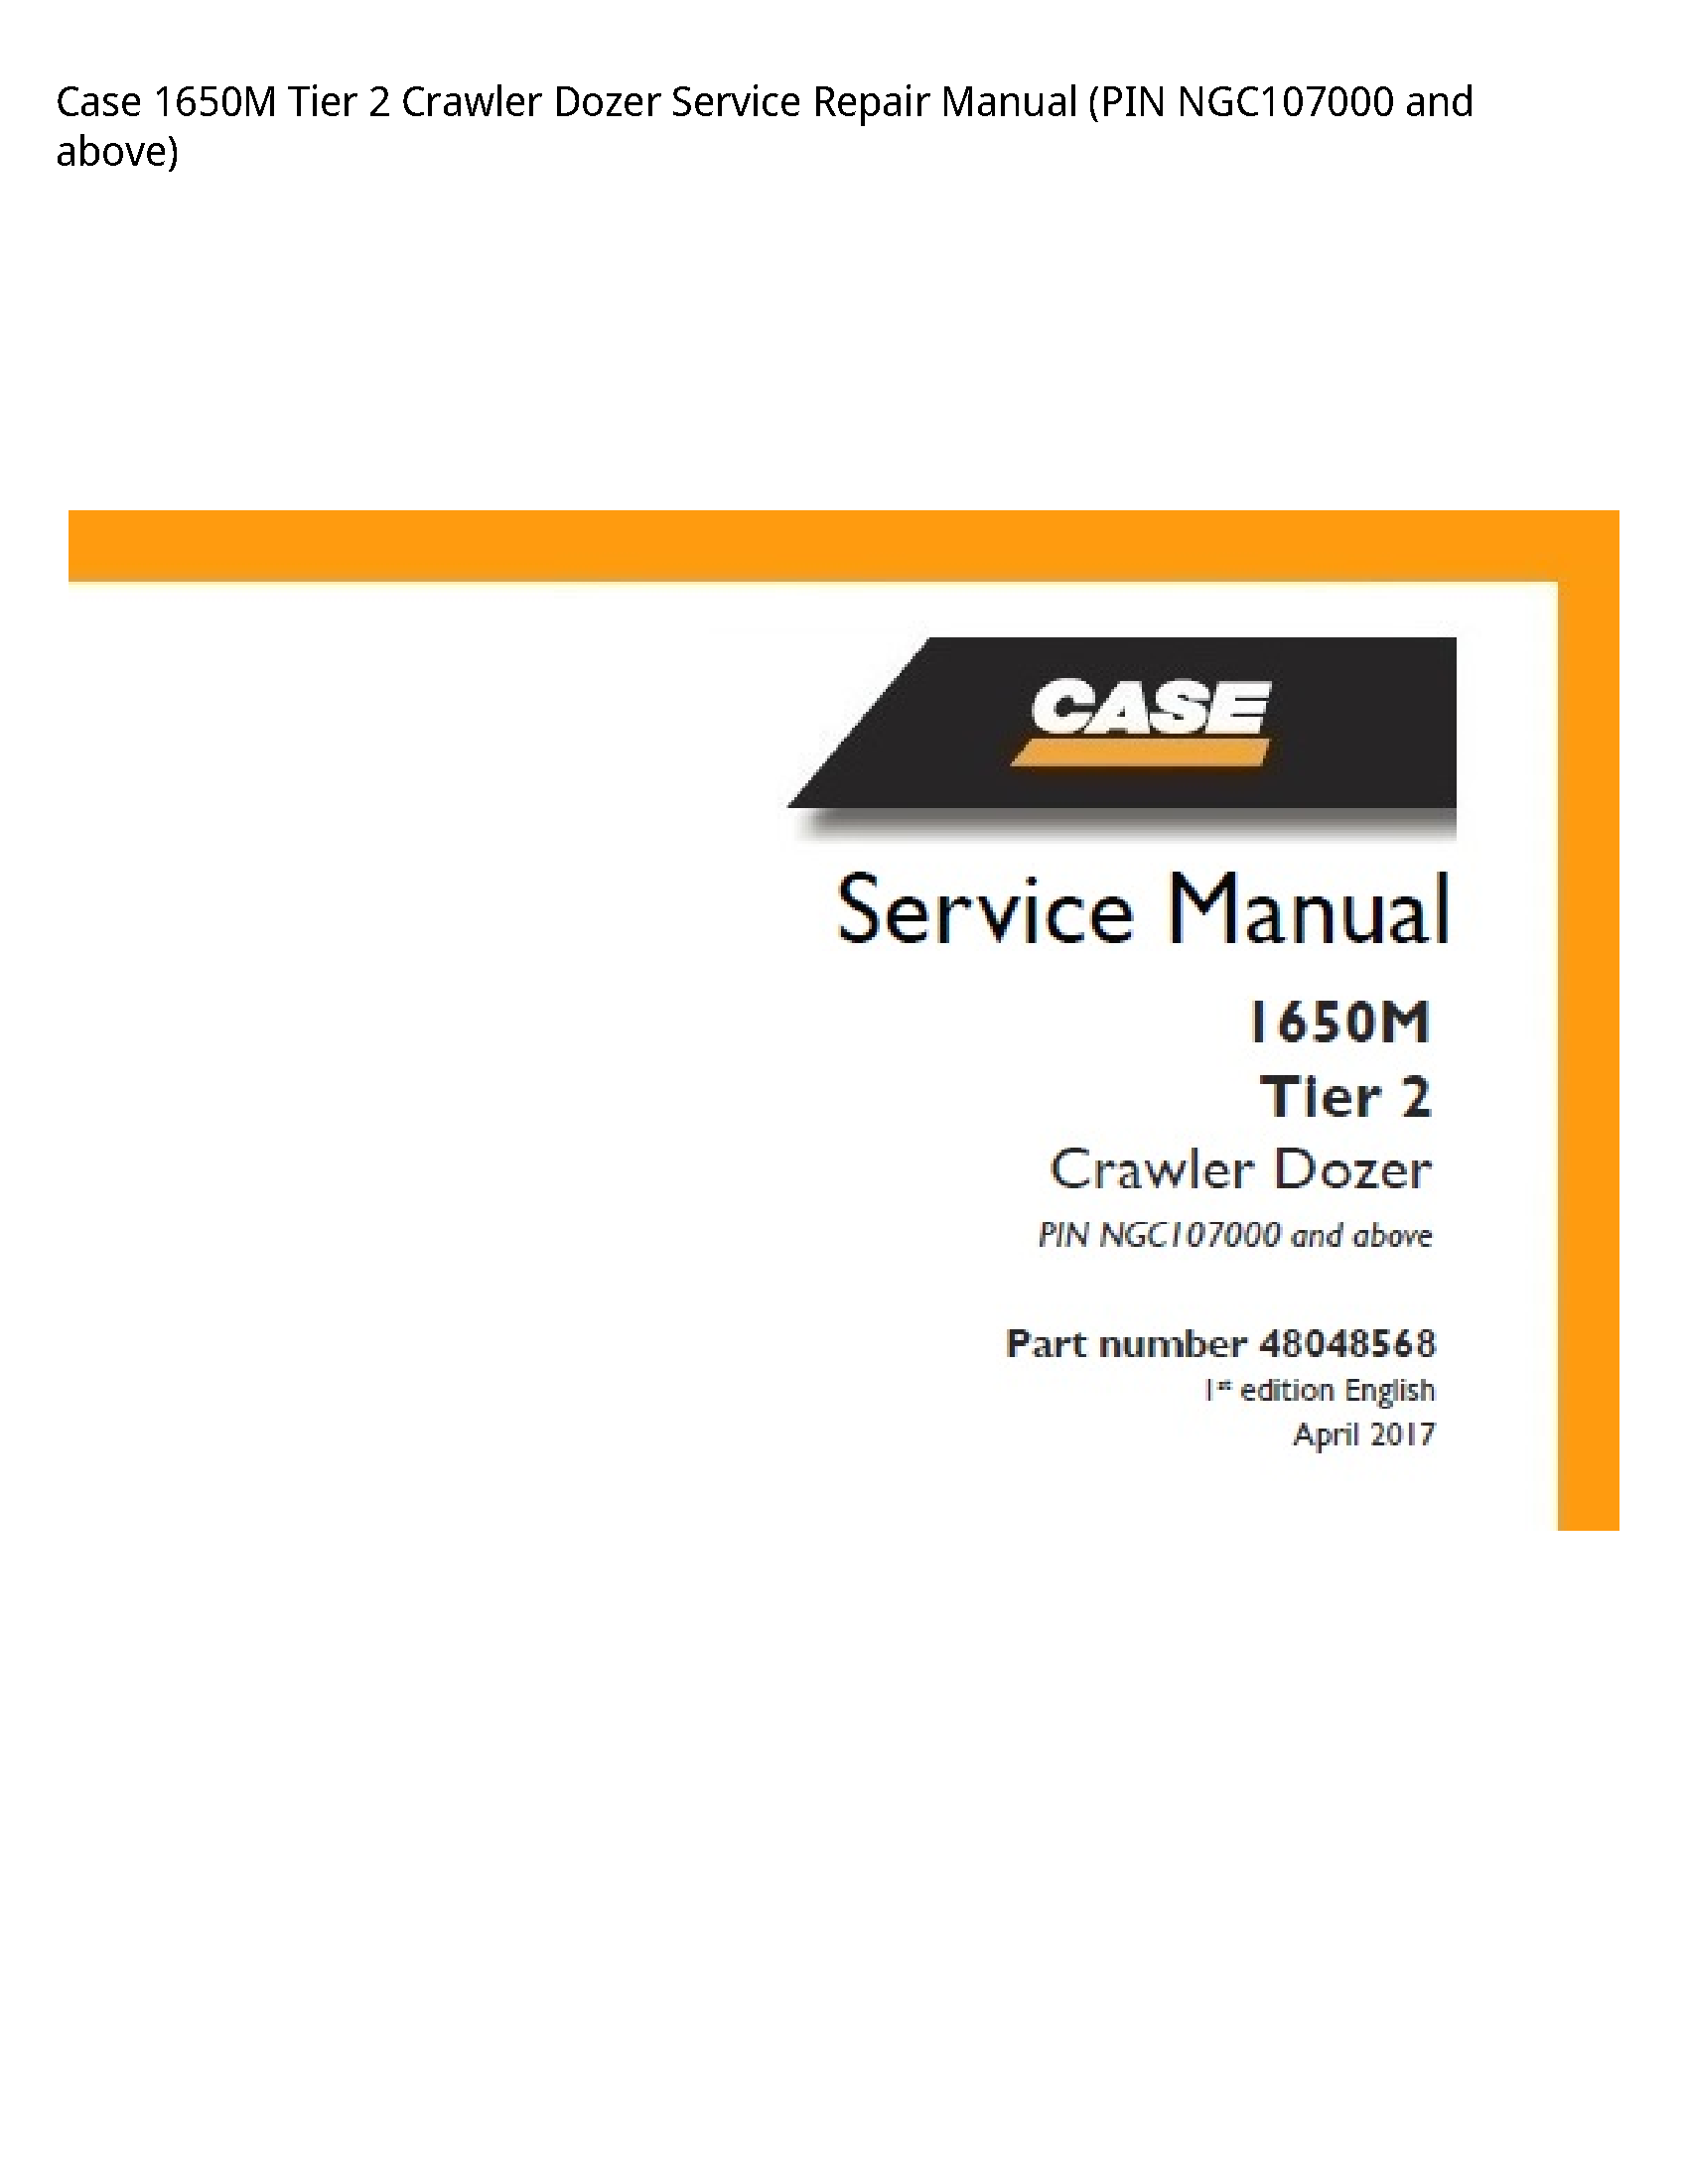 Case/Case IH 1650M Tier Crawler Dozer manual